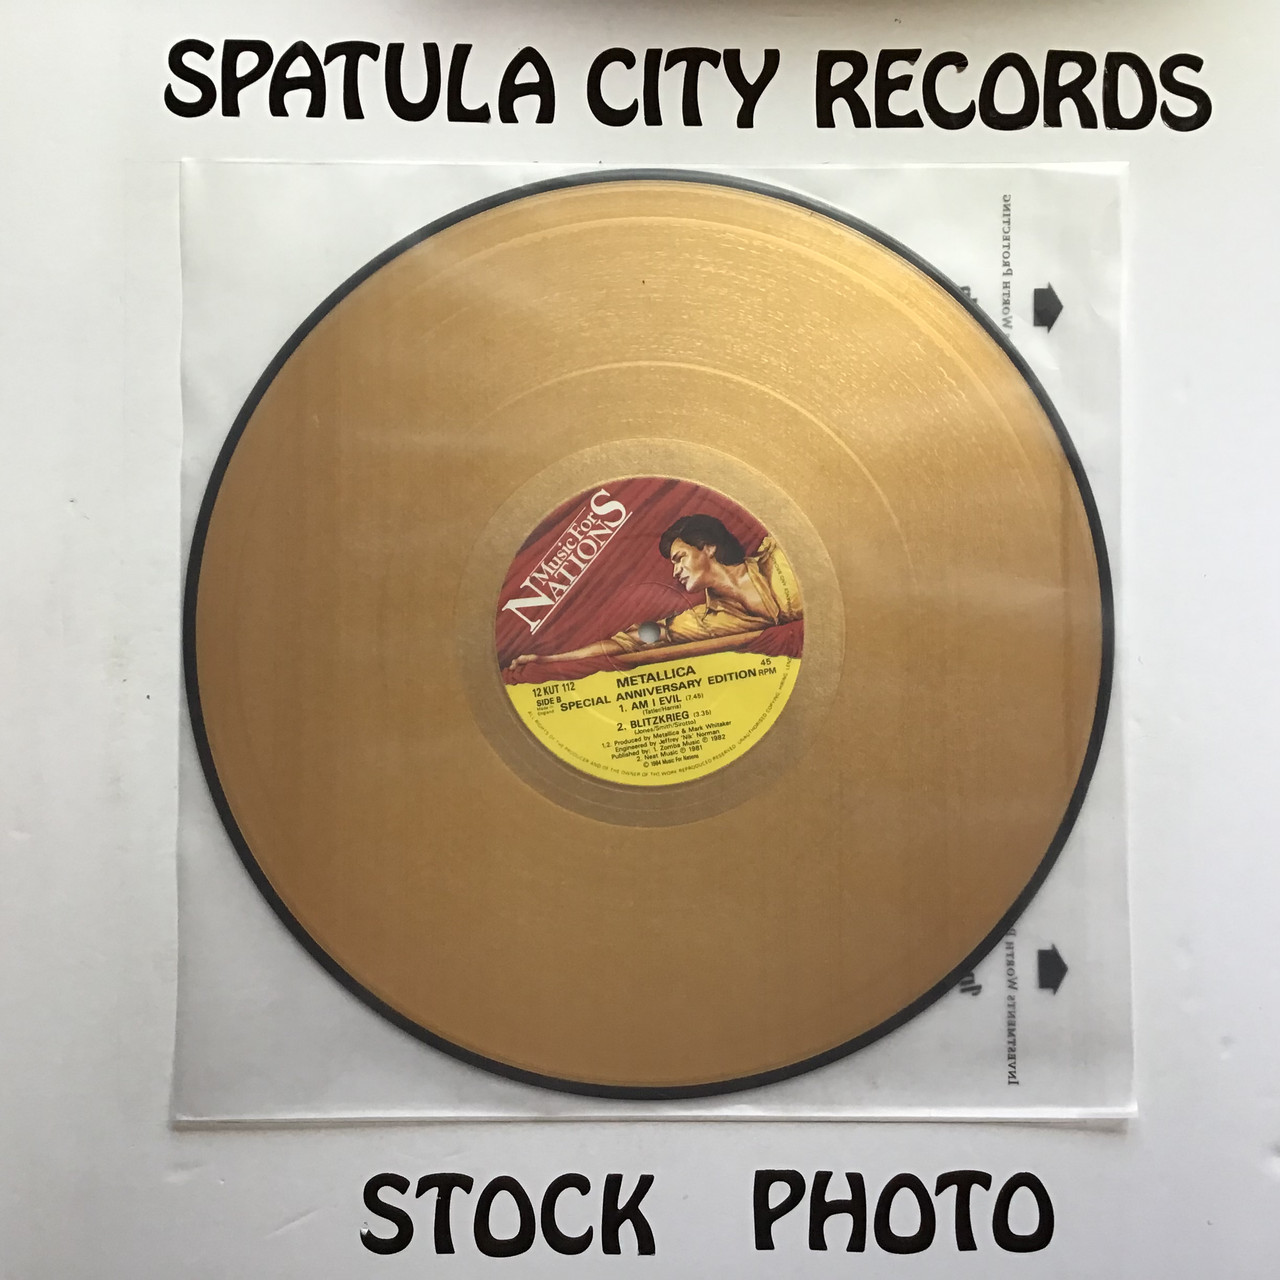 Metallica - Creeping Death - IMPORT - Gold Anniversay Edition 12" single vinyl record album LP